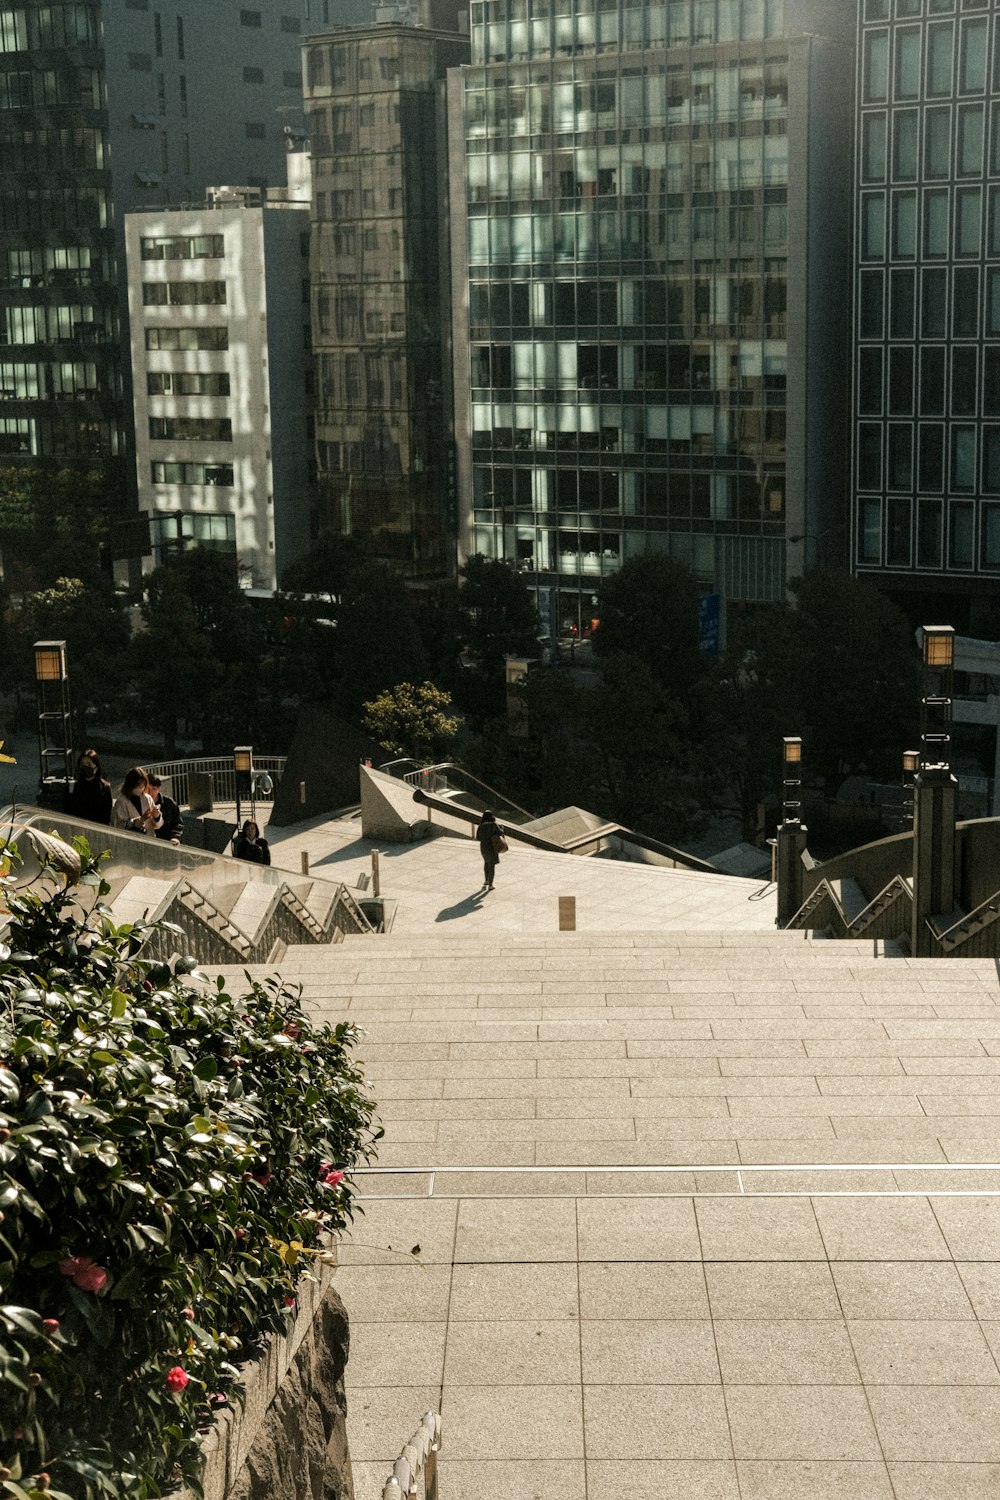 a man riding a skateboard down a sidewalk next to tall buildings